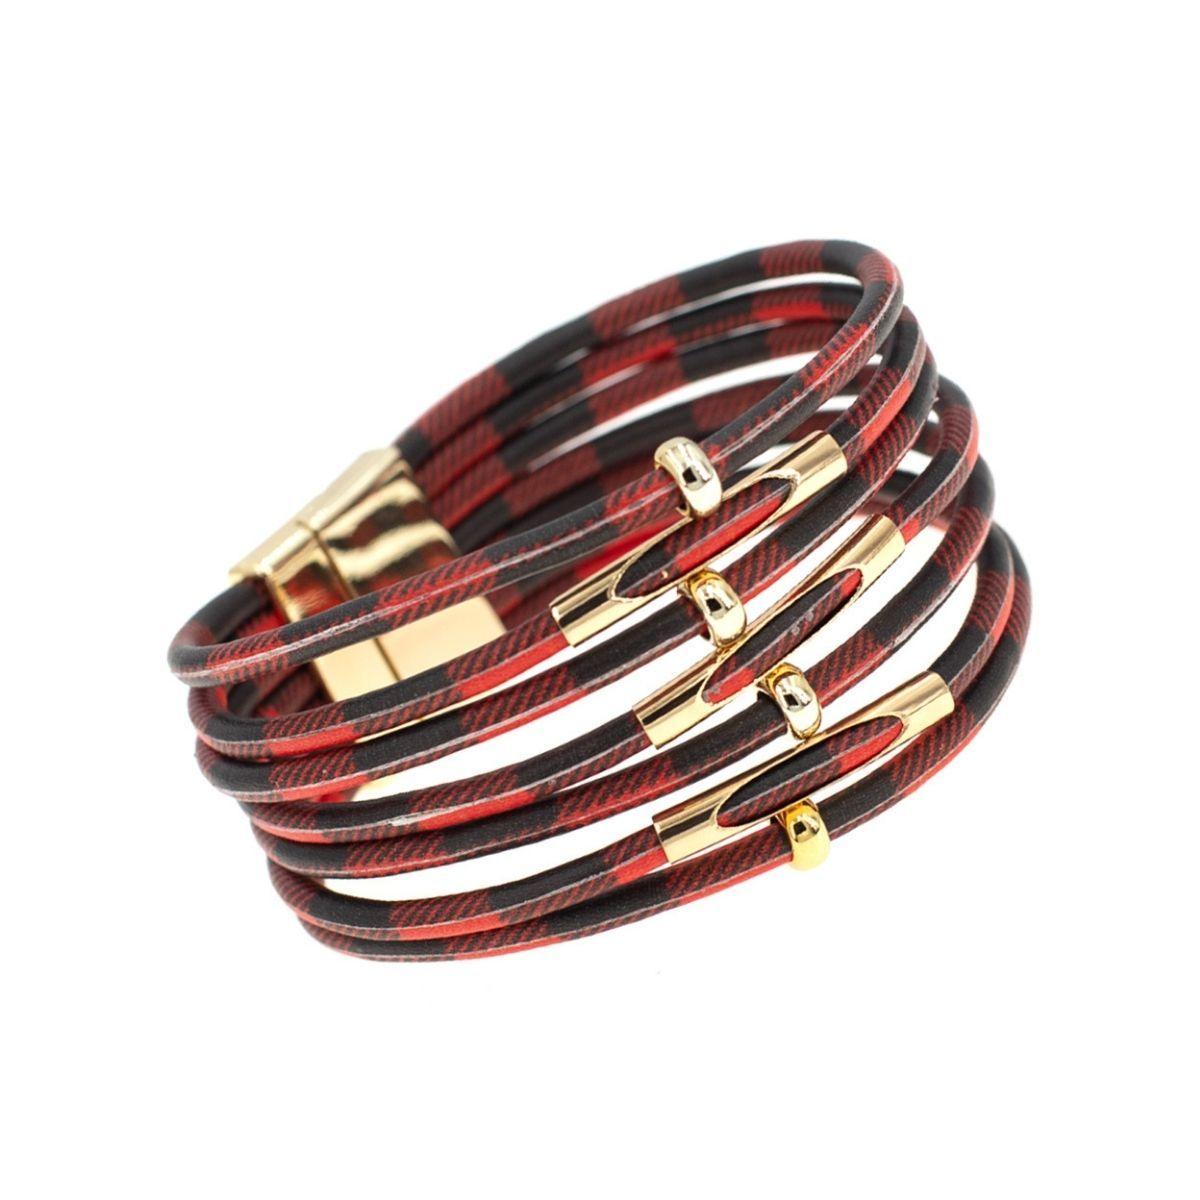 Trendy Red Cord Bracelet: Shop Now for Stylish Women's Jewelry